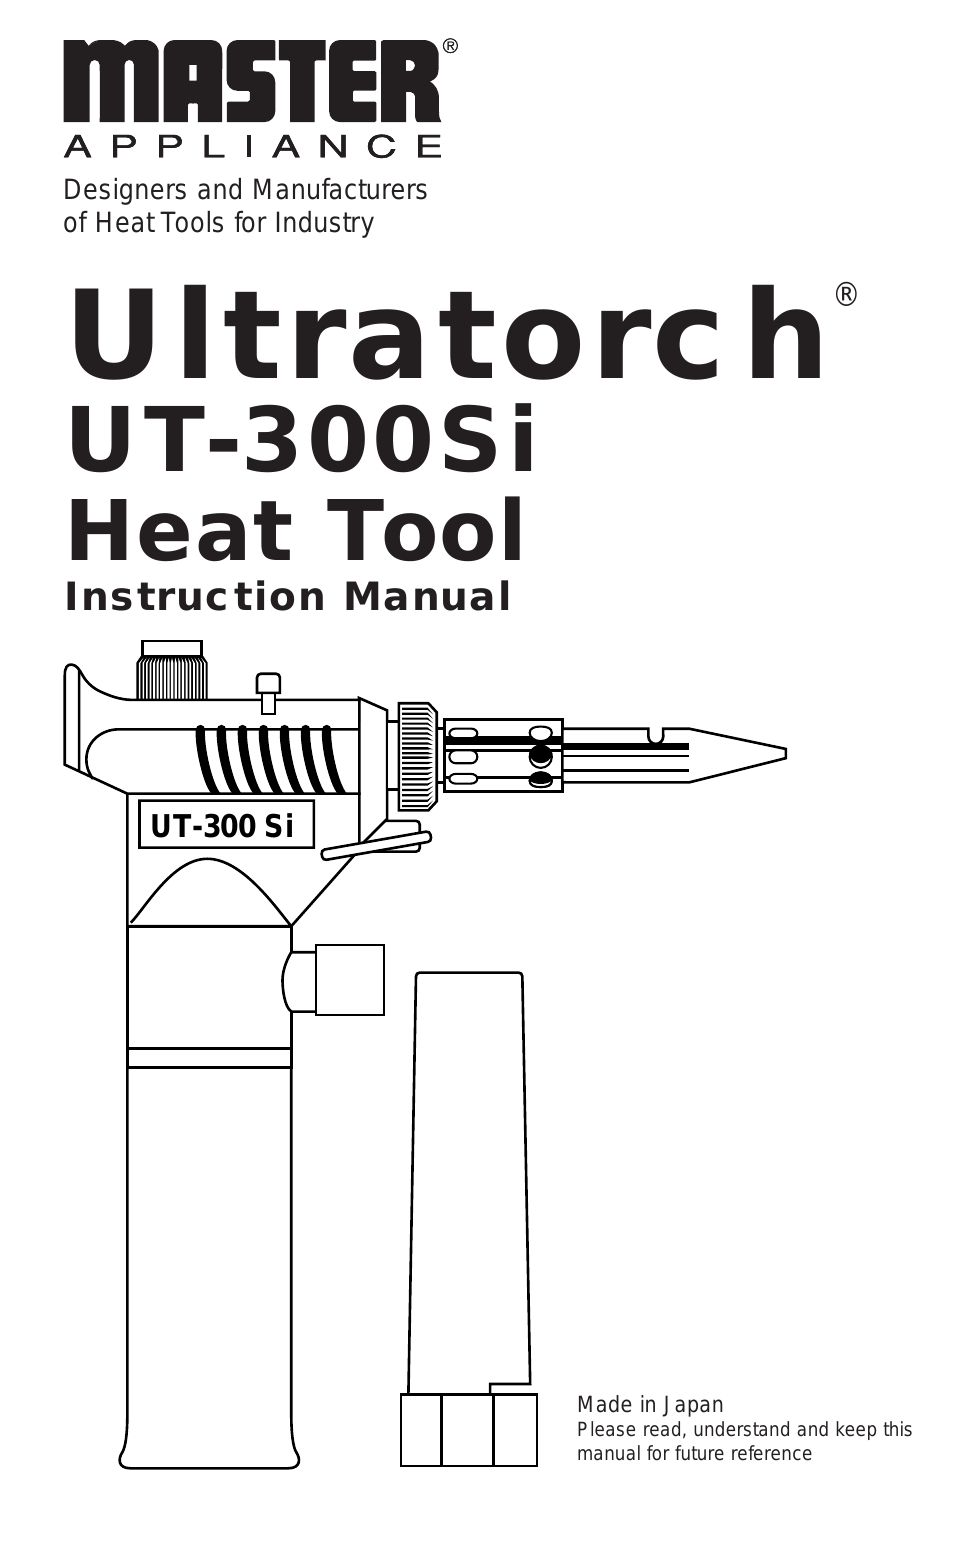 UT-300Si Ultratorch Heat Tool